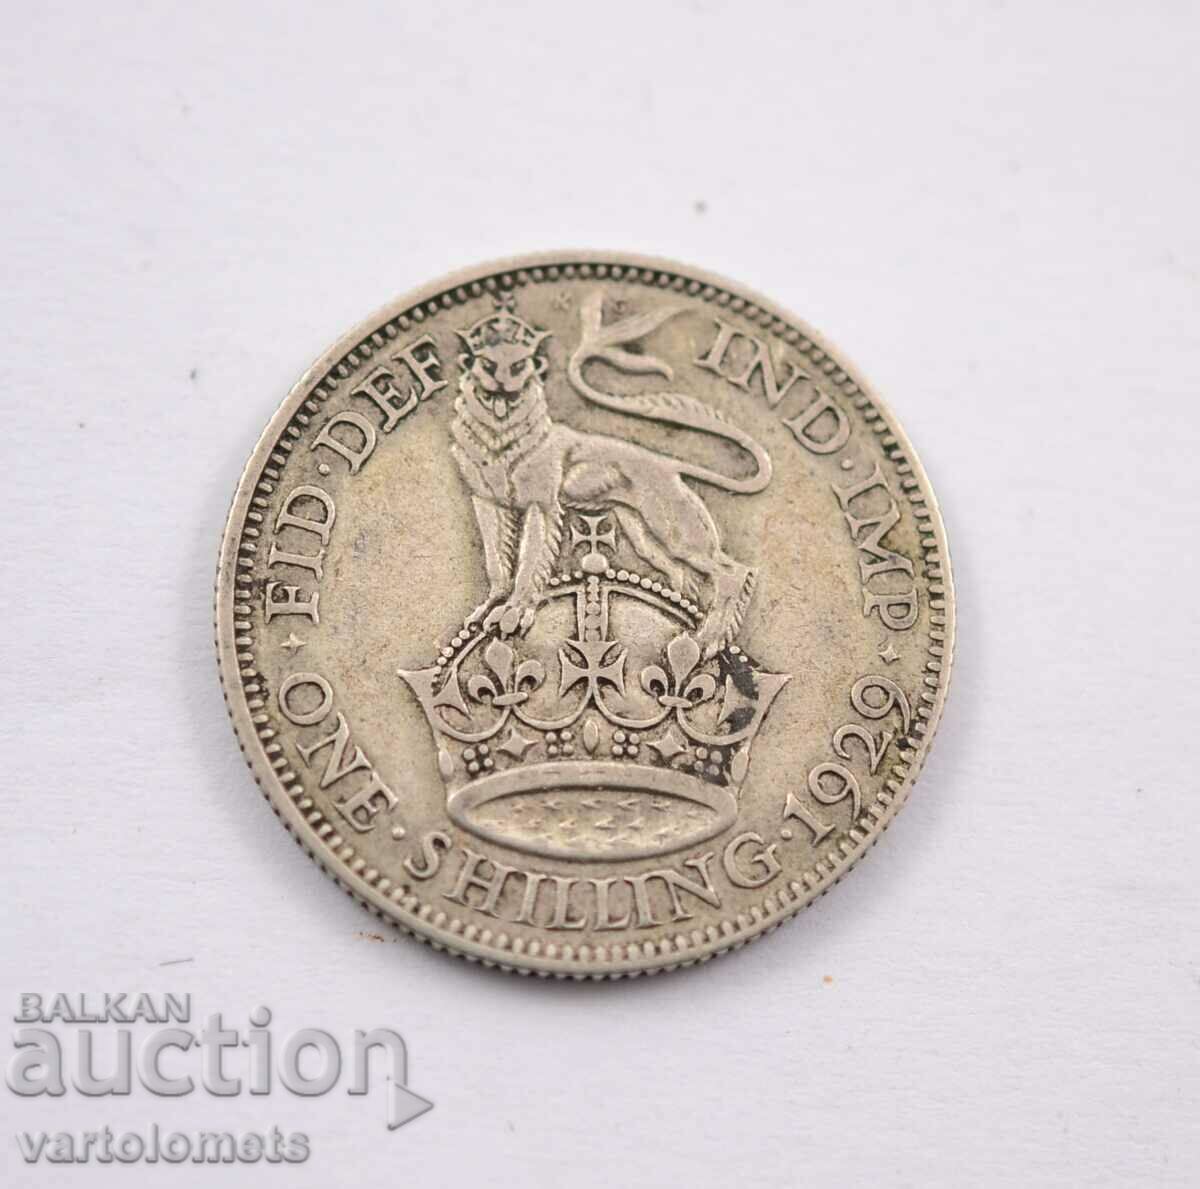 1 shilling, 1929 - United Kingdom › King George V, silver